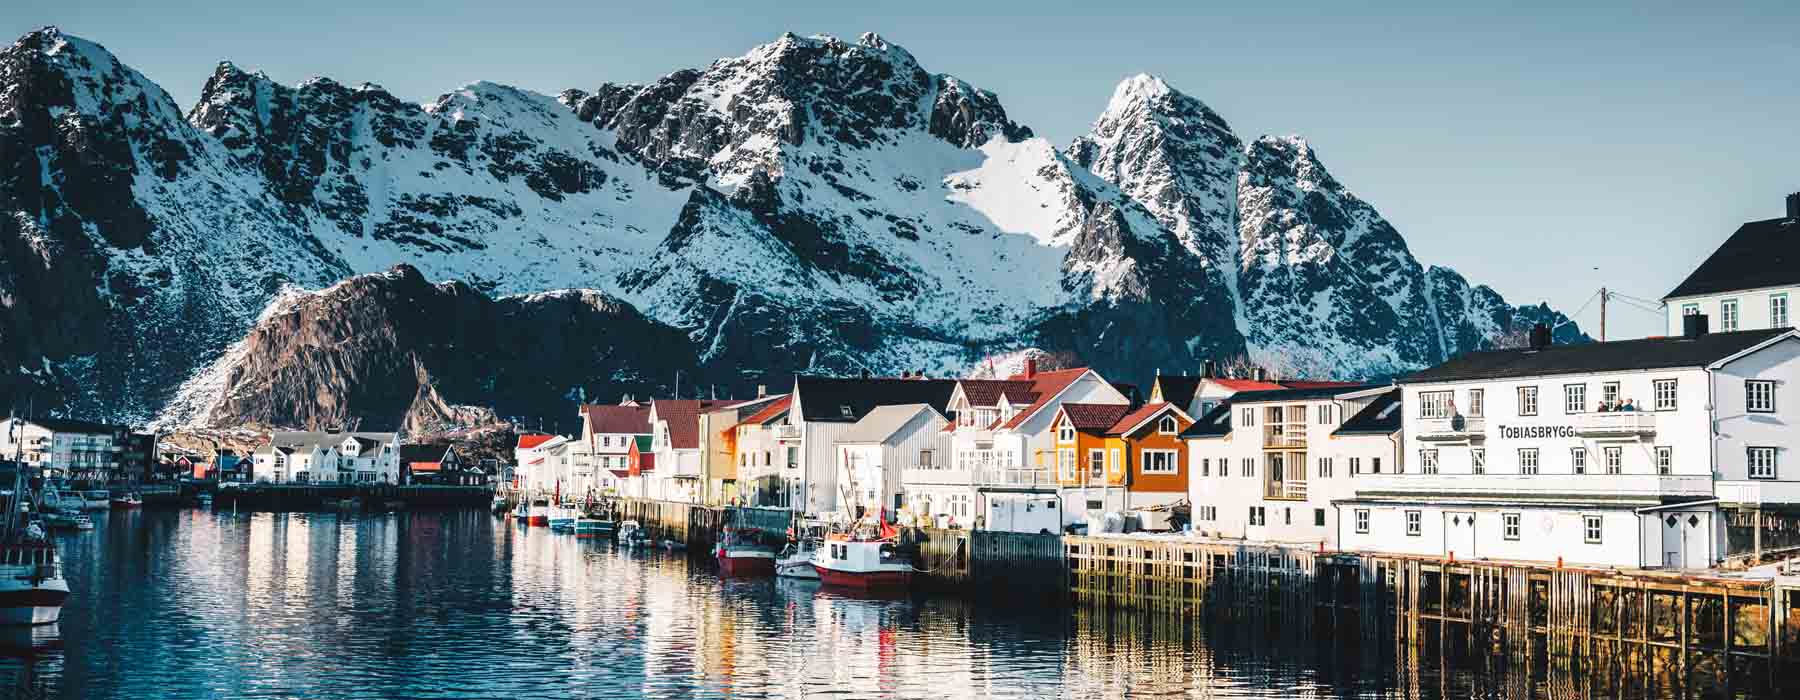 Norway<br class="hidden-md hidden-lg" /> Reconnect Travel